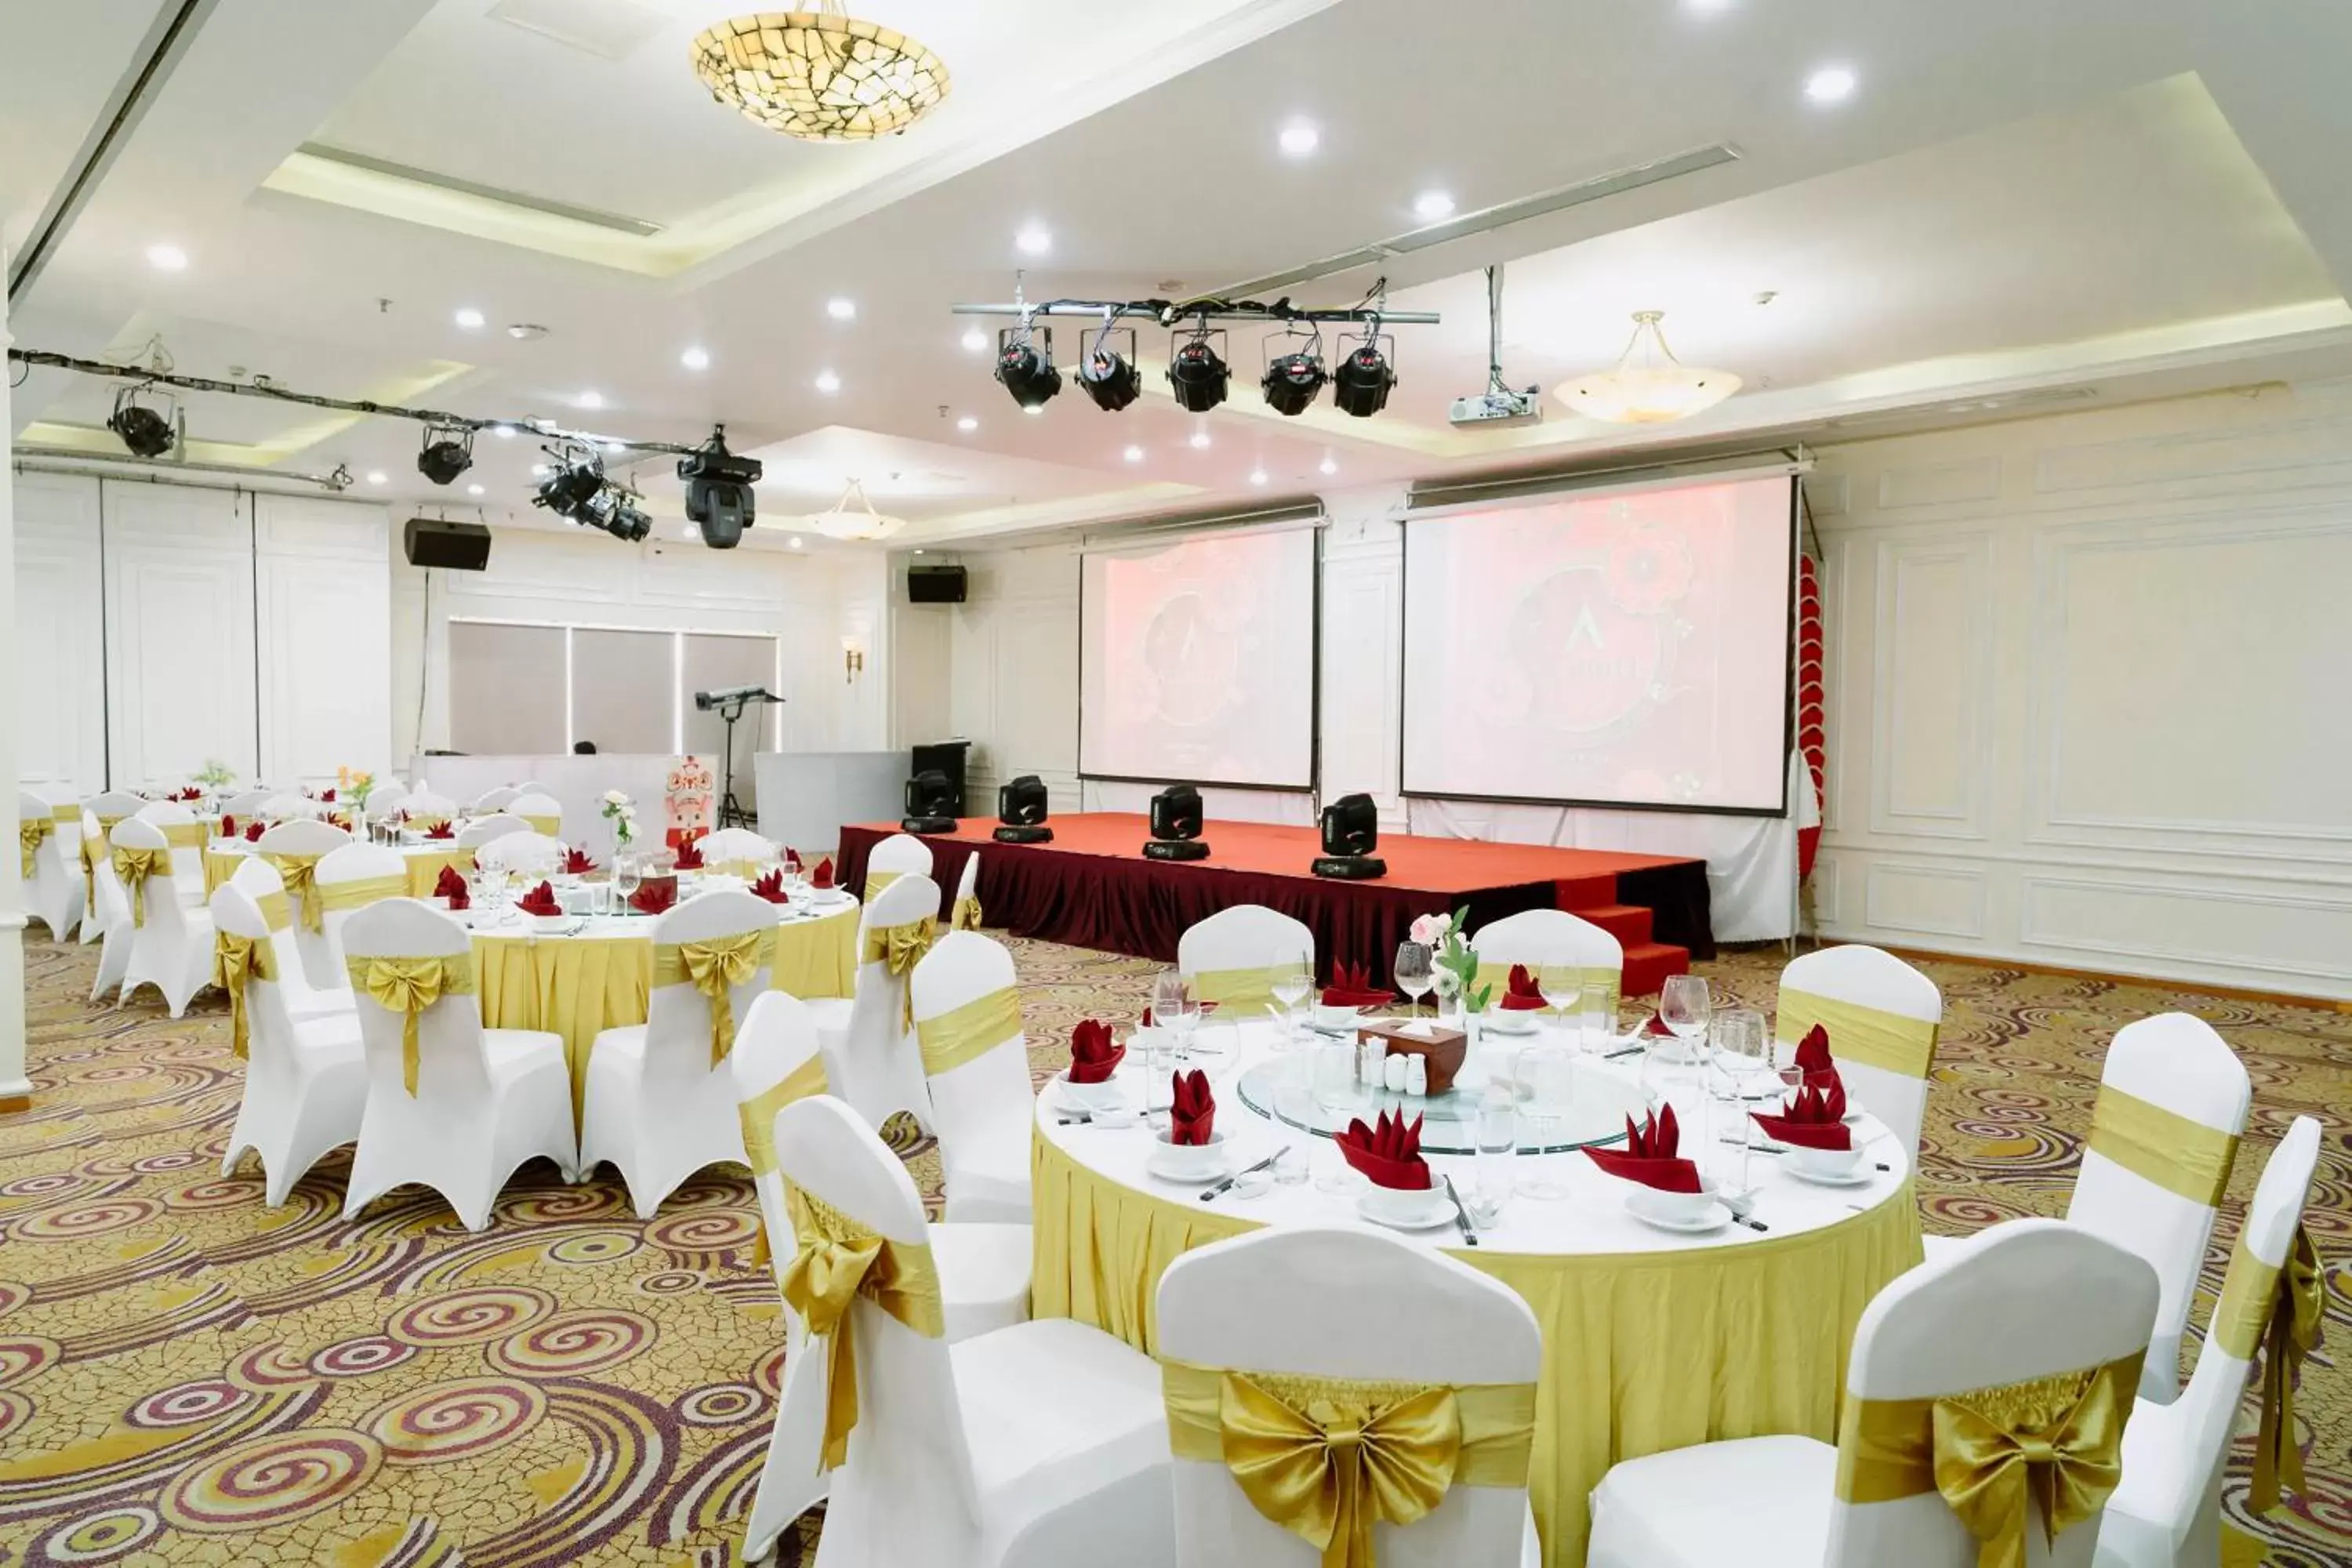 Banquet/Function facilities, Banquet Facilities in A25 Luxury Hotel